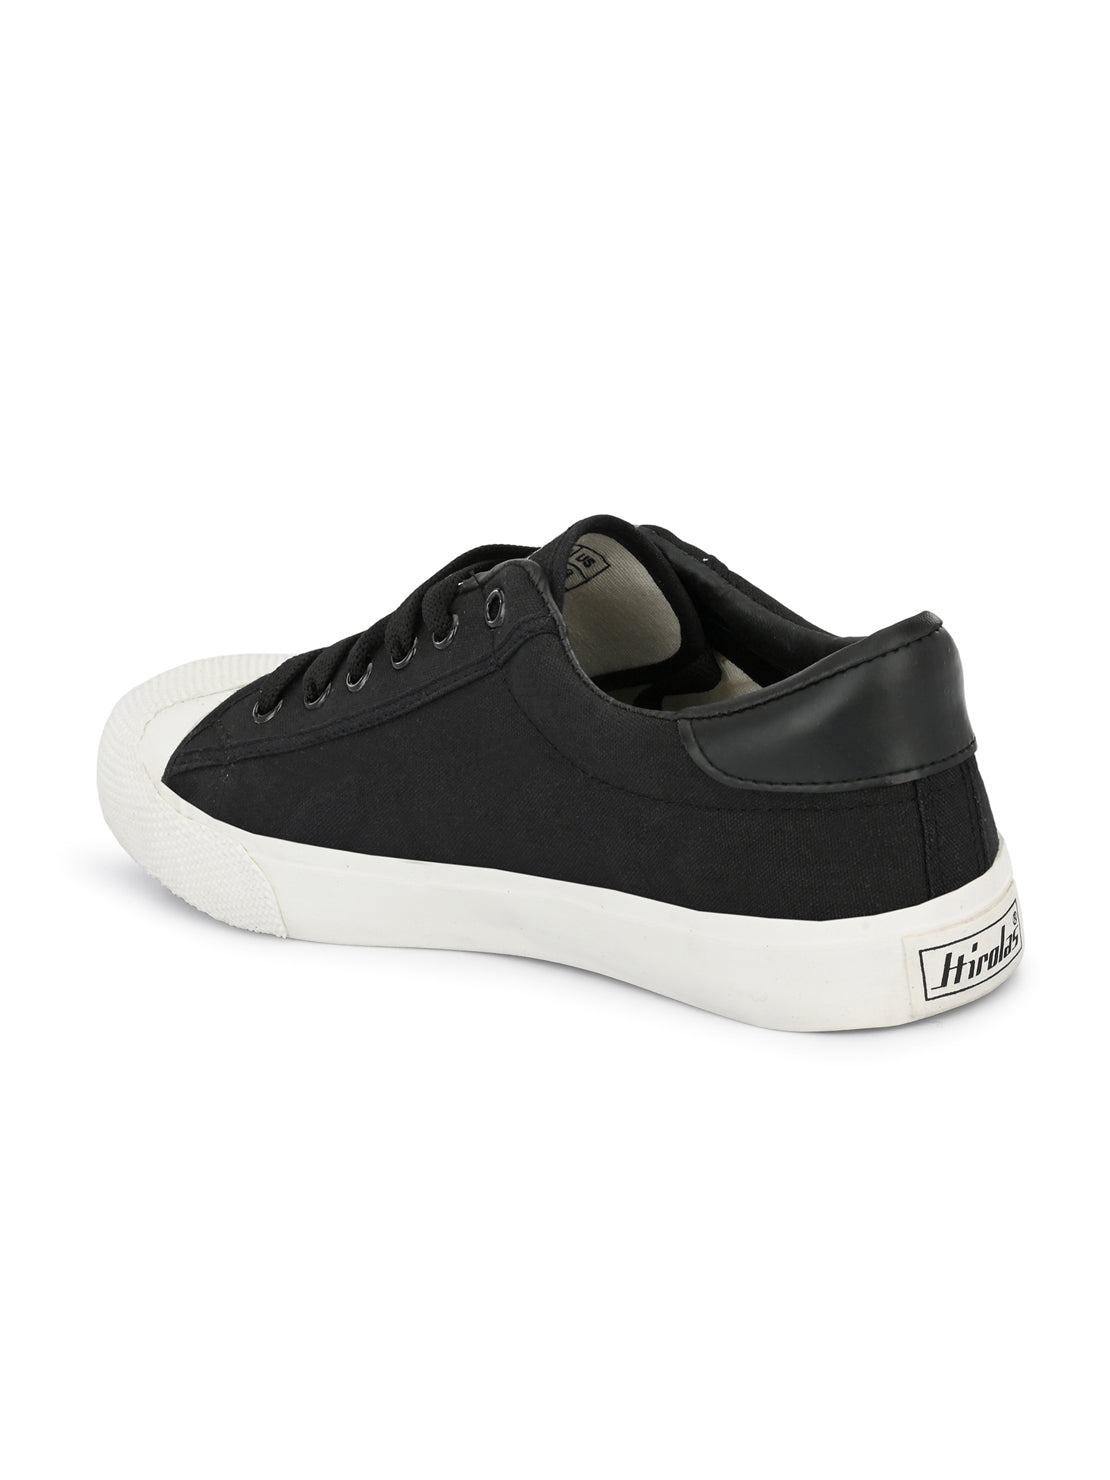 Hirolas® Men's Black Canvas Vulcansied Skateboard Lace Up Sneaker Shoes (HRL2076BLK)